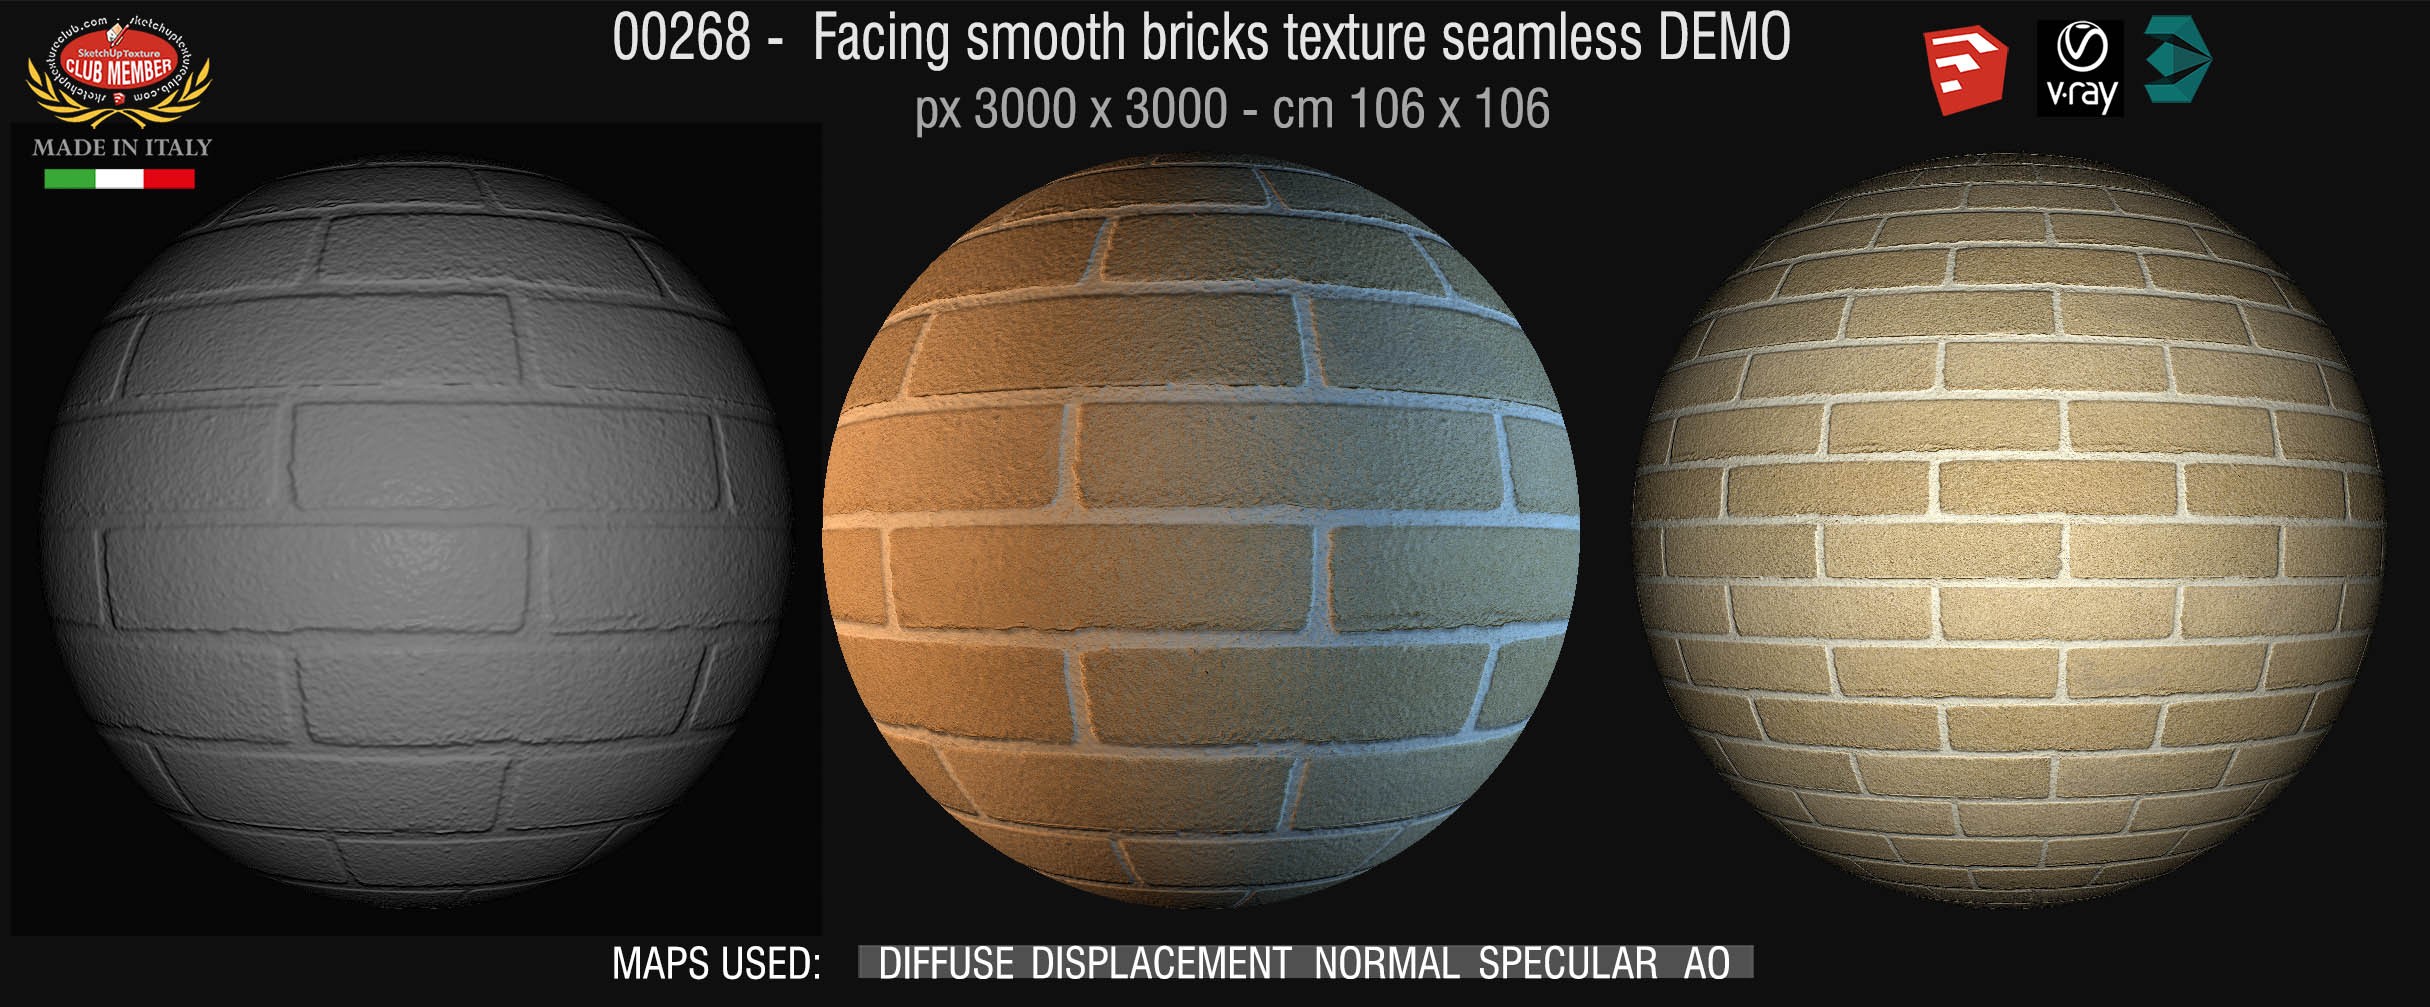 00268 Facing smooth bricks texture seamless + maps DEMO